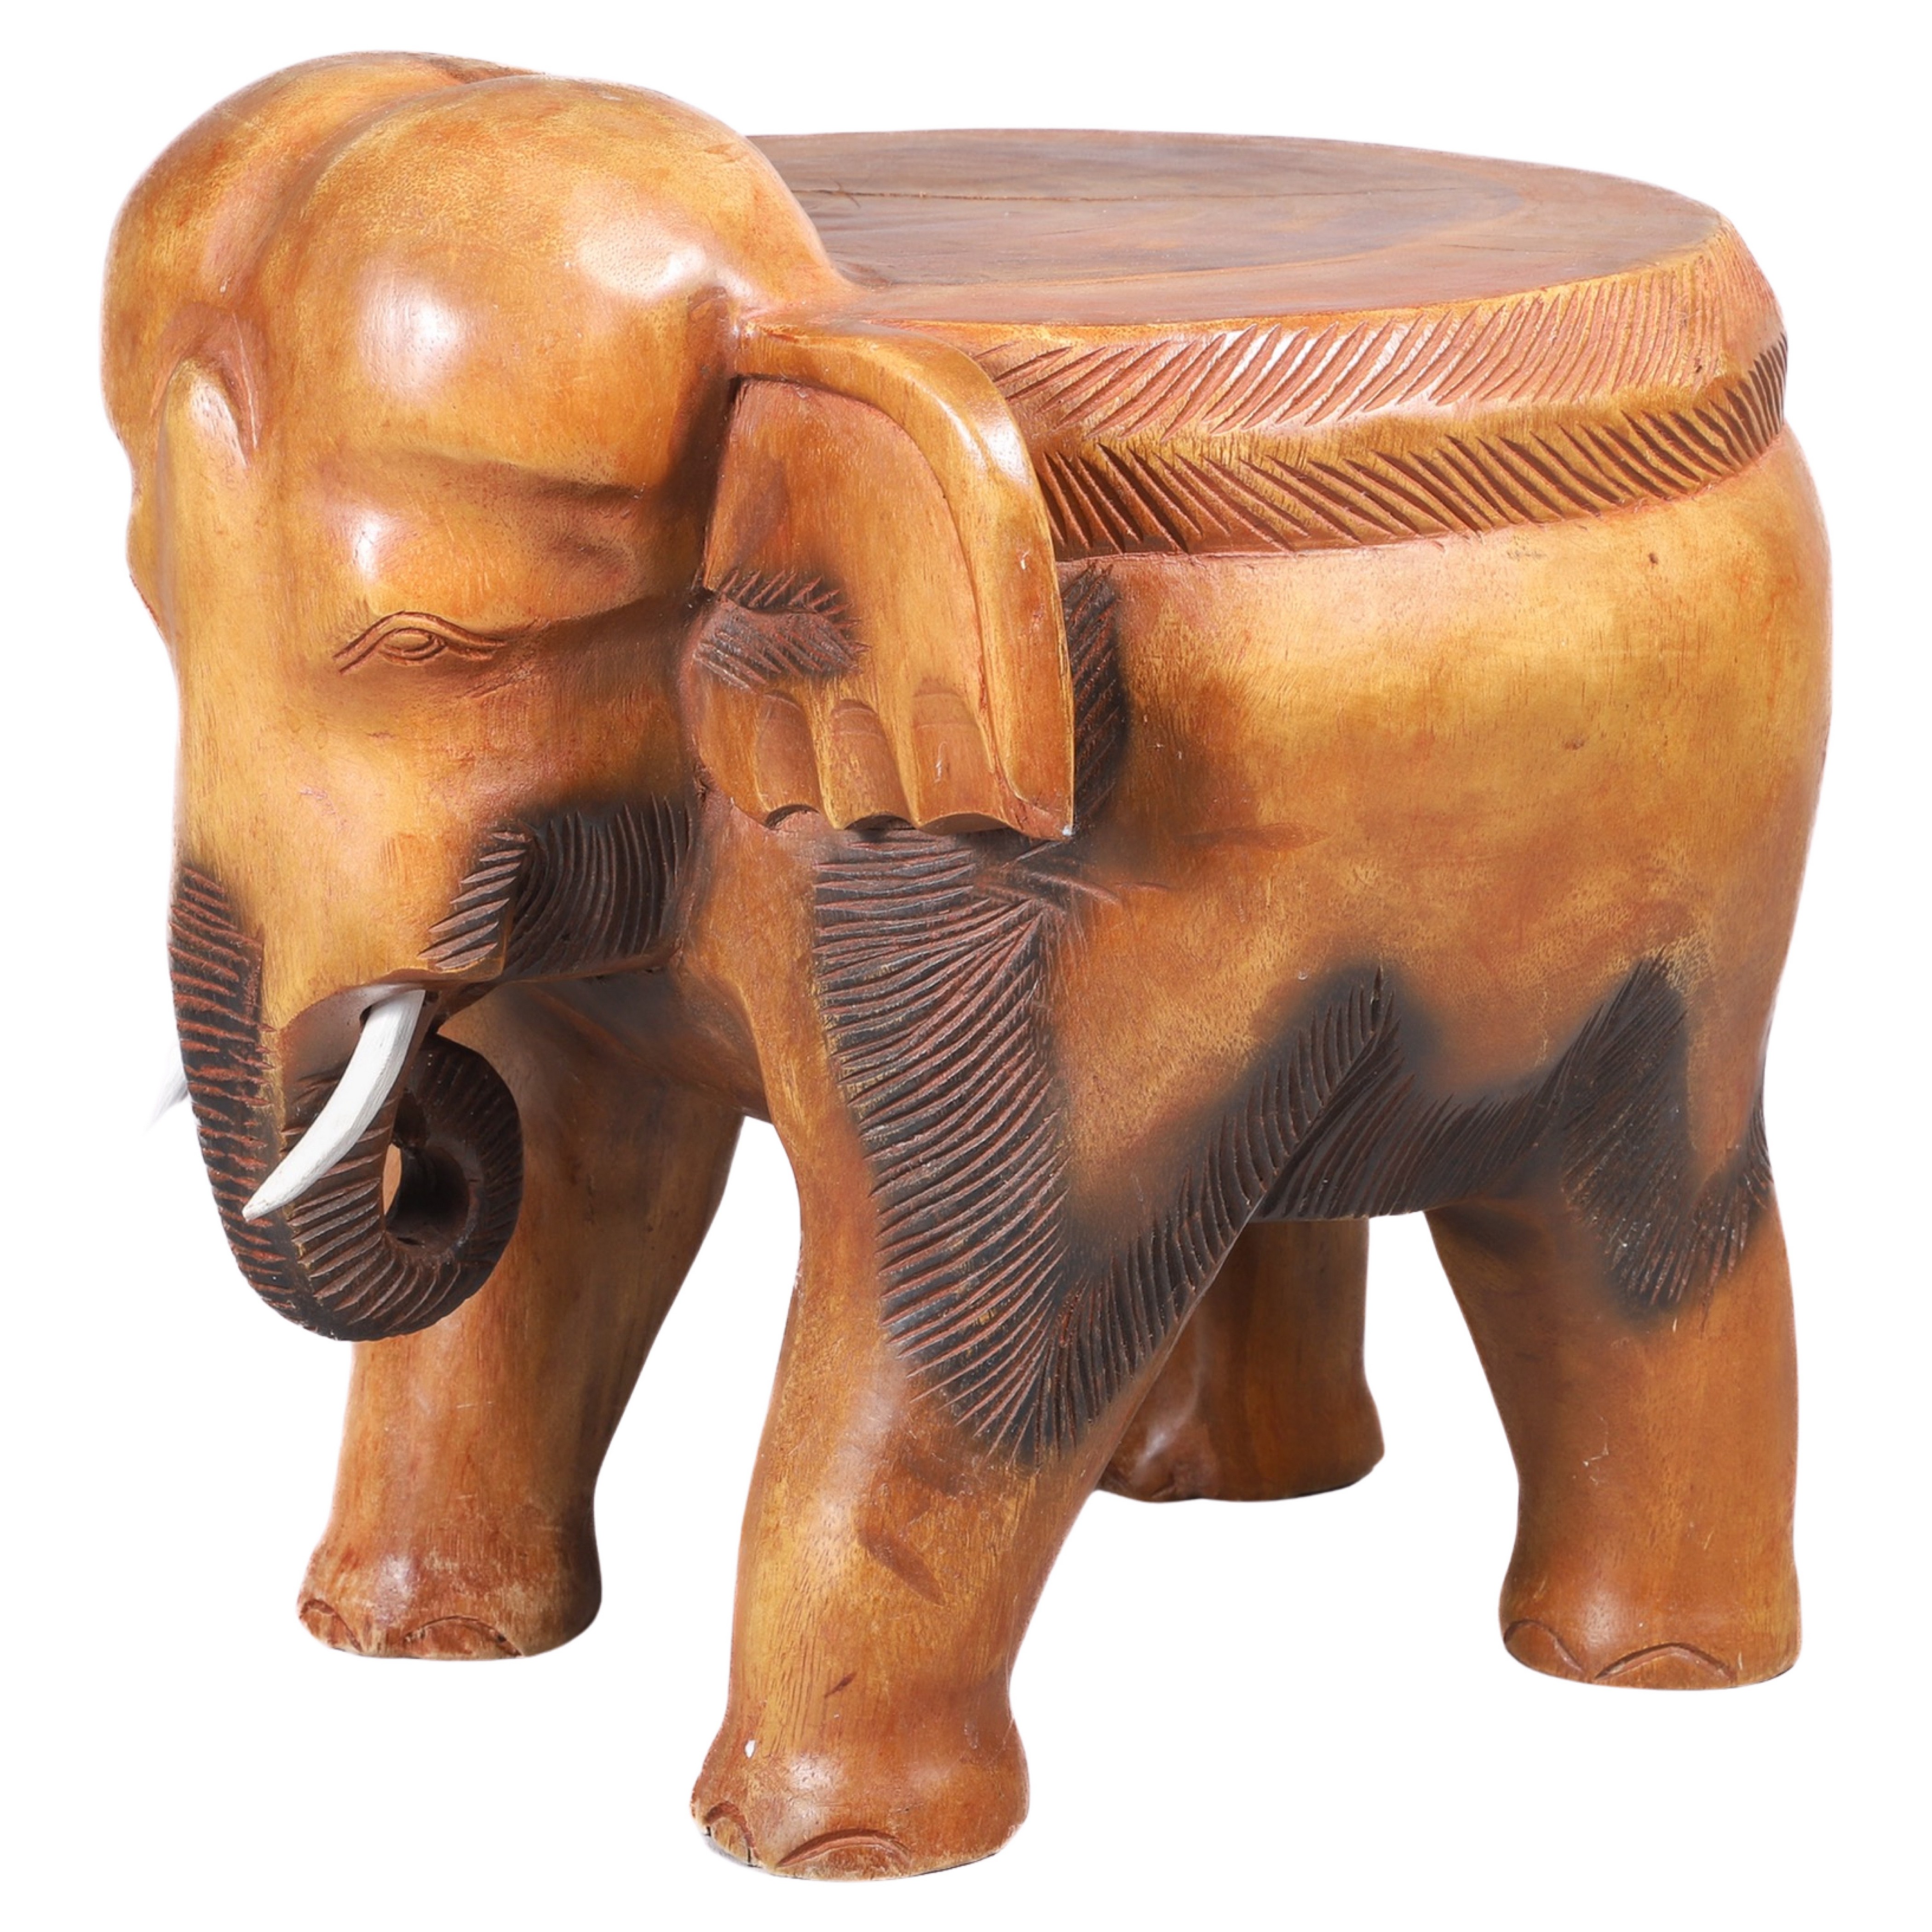 Carved wood elephant stool with 3b4f3b